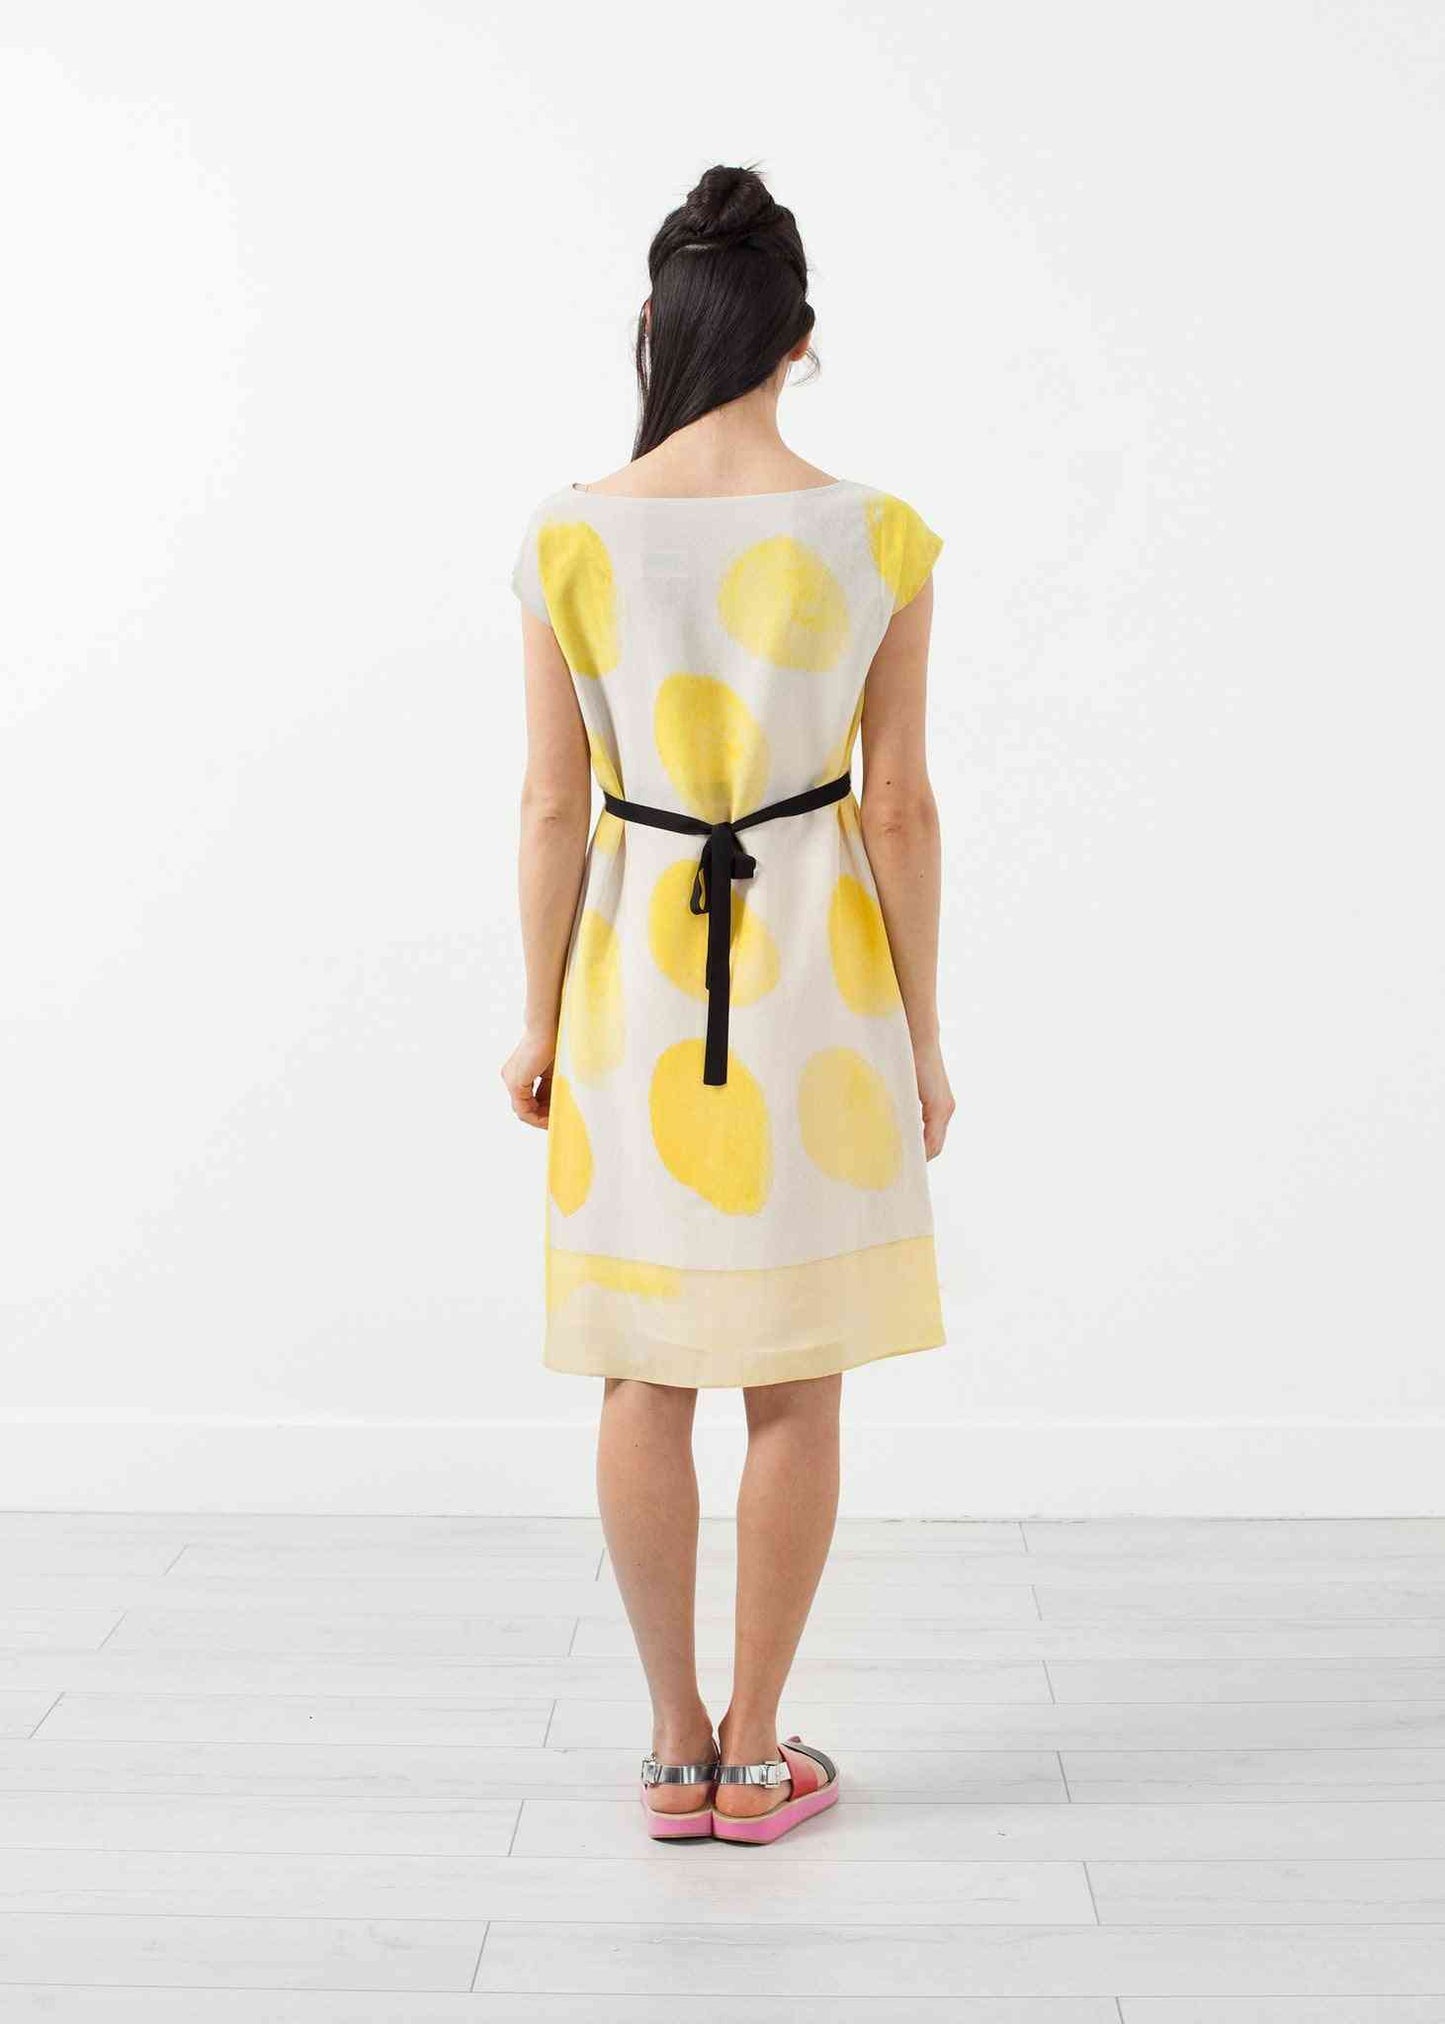 Paper Dress Antoni & Alison women's dresses Yellow 8 7572880809